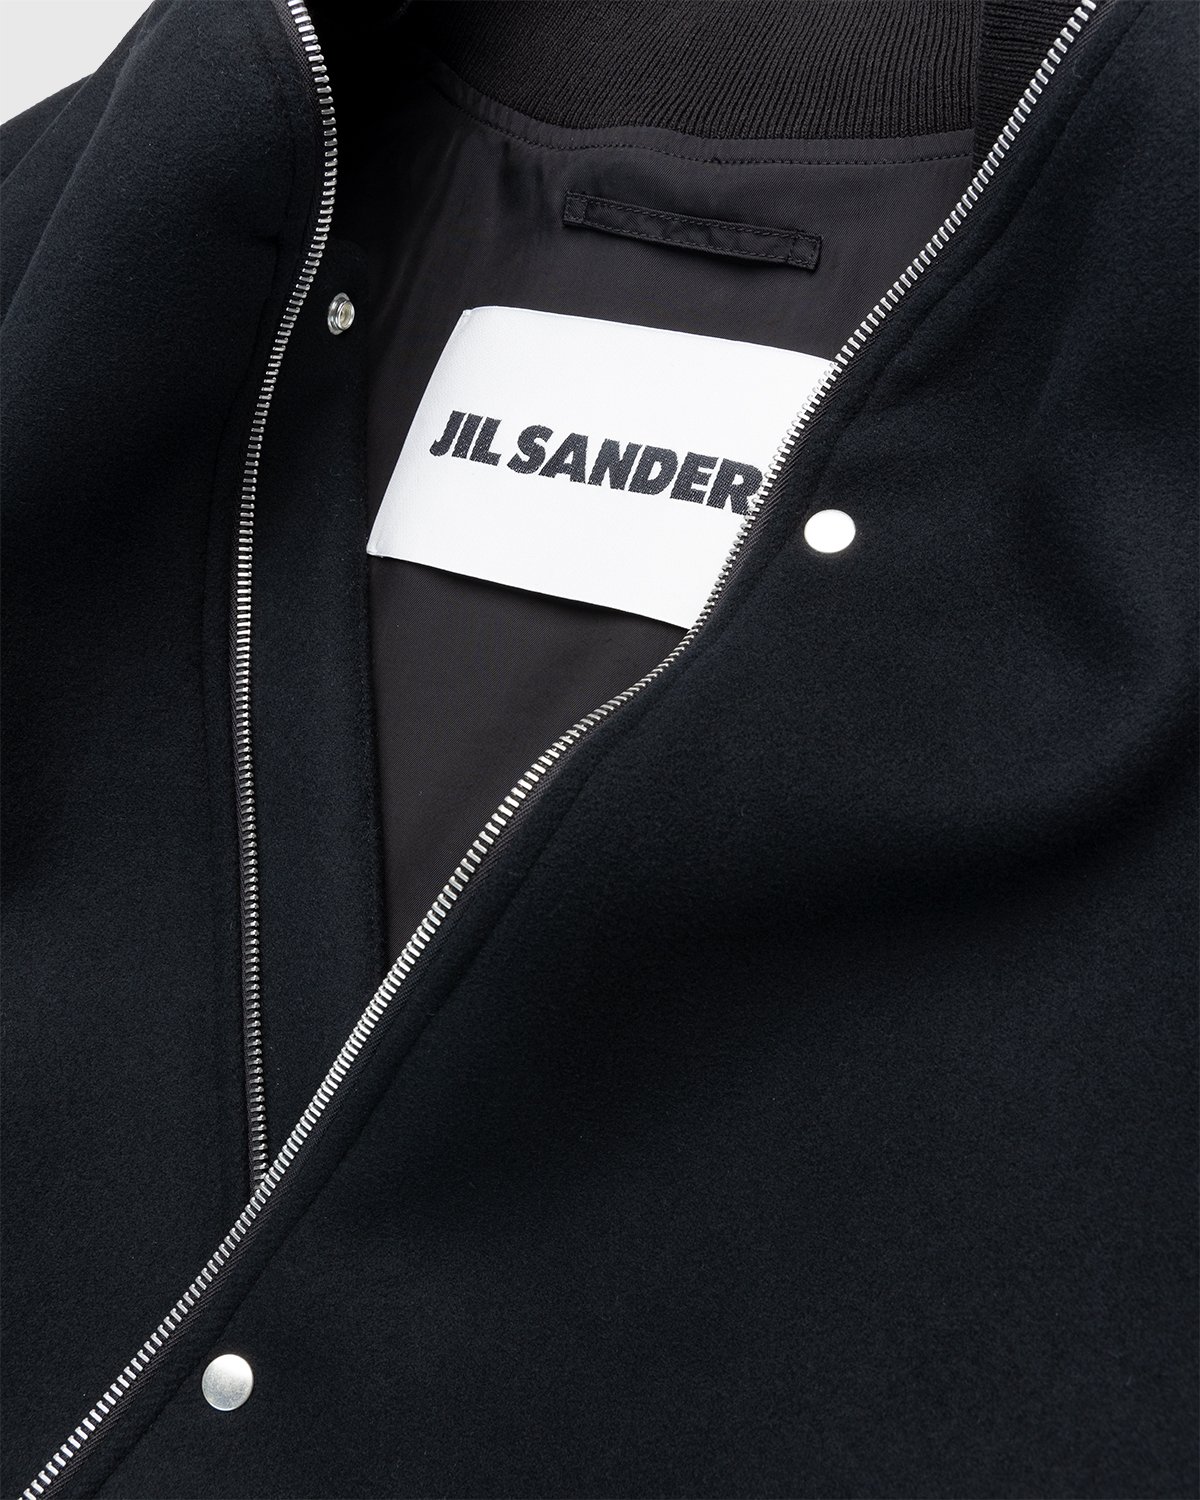 Jil Sander - Blouson Black - Clothing - Black - Image 3